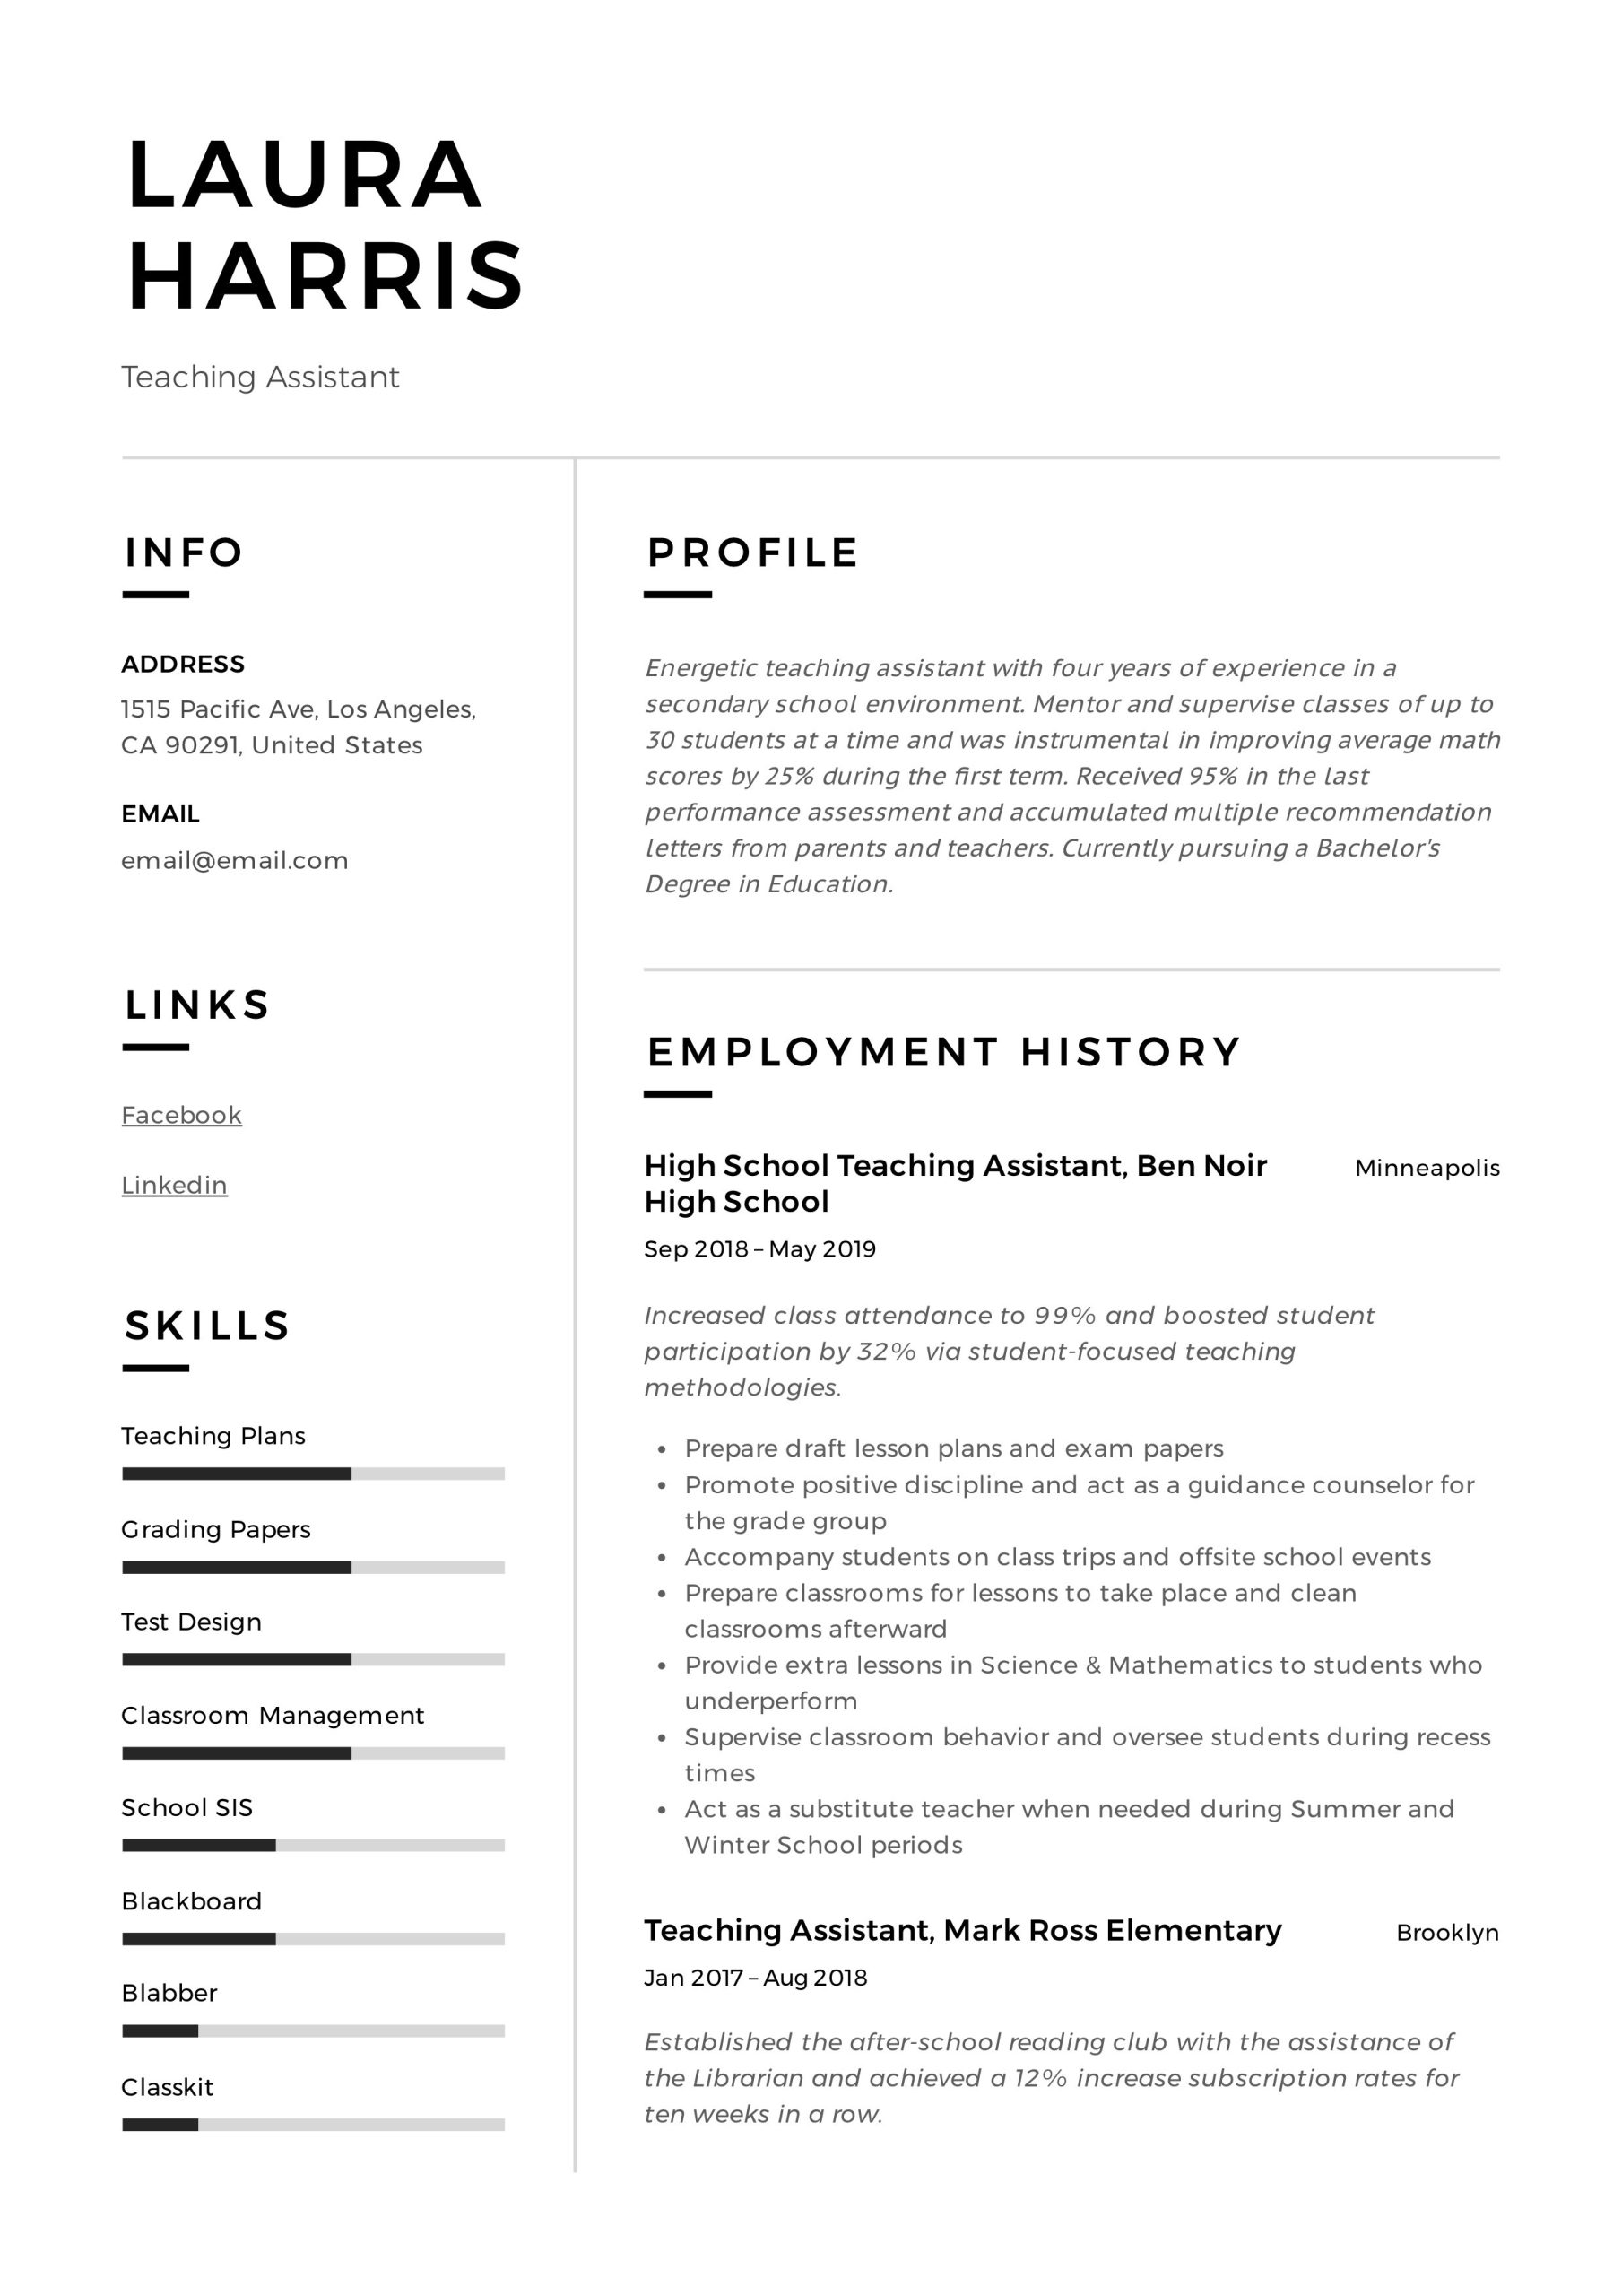 Sample Resume Description Of Adjunct Professor Teaching assistant Resume & Writing Guide  12 Templates Pdf